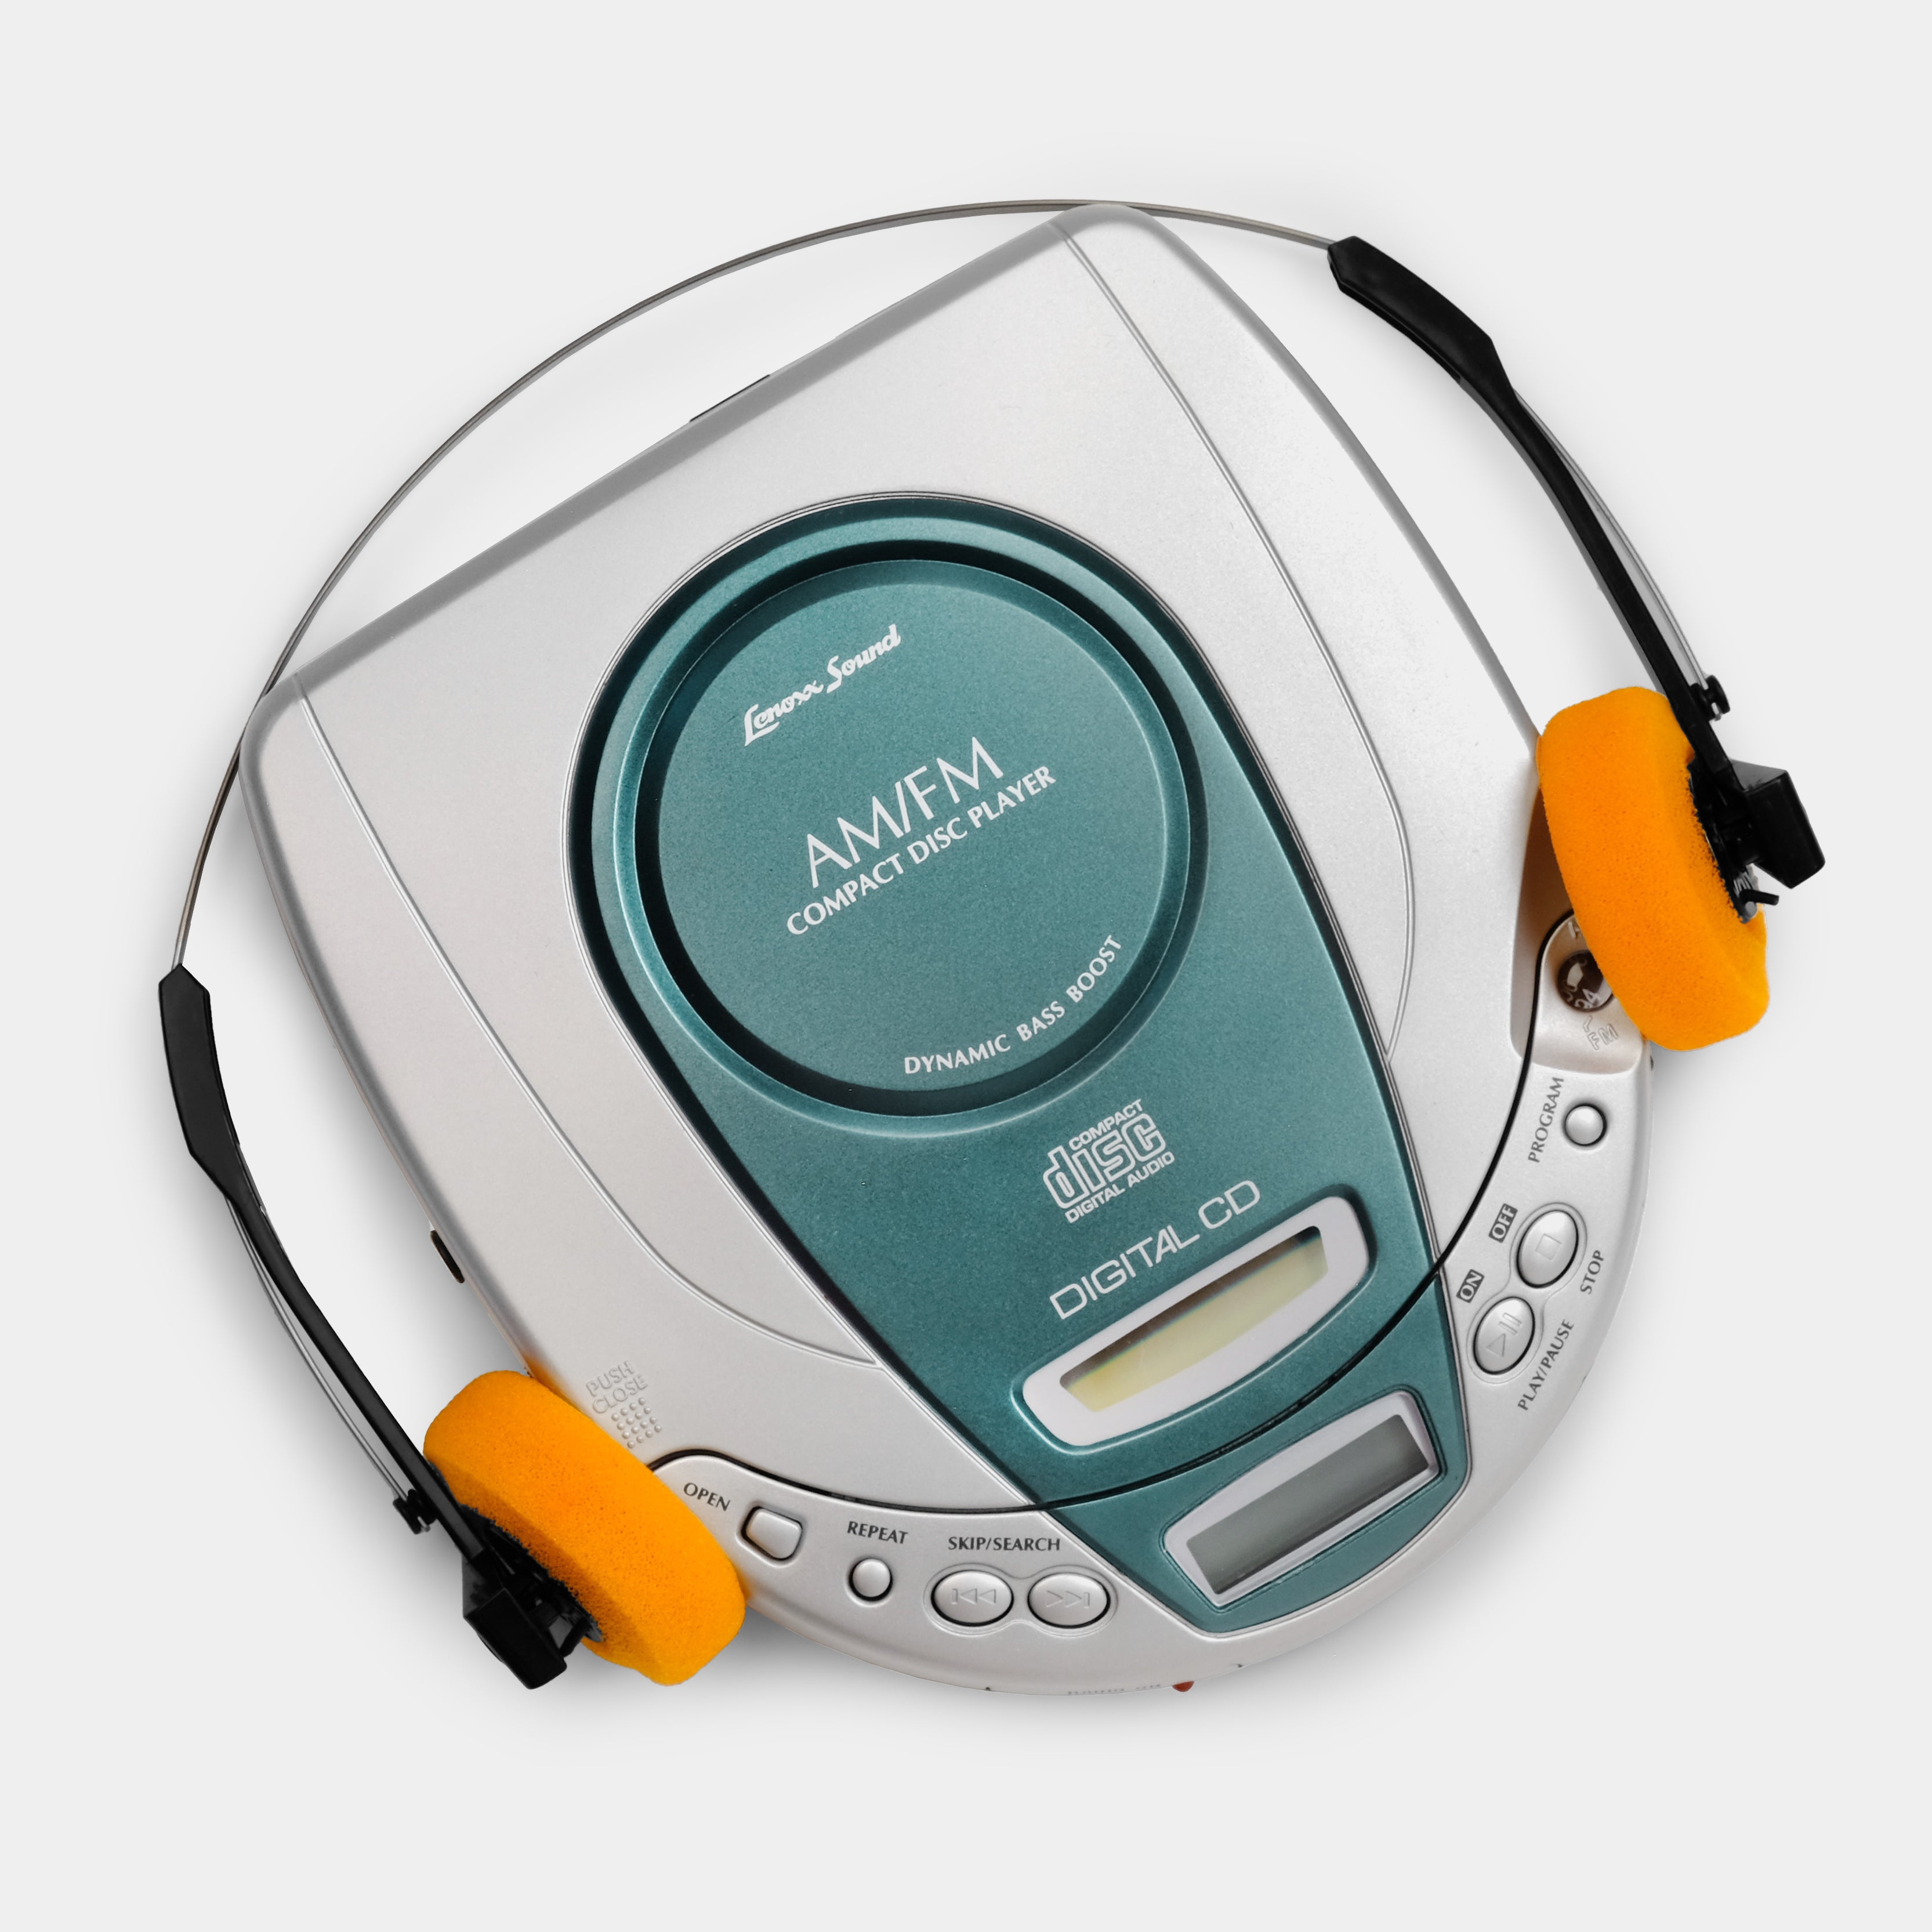 Lenoxx Sound CD-61 Portable CD Player